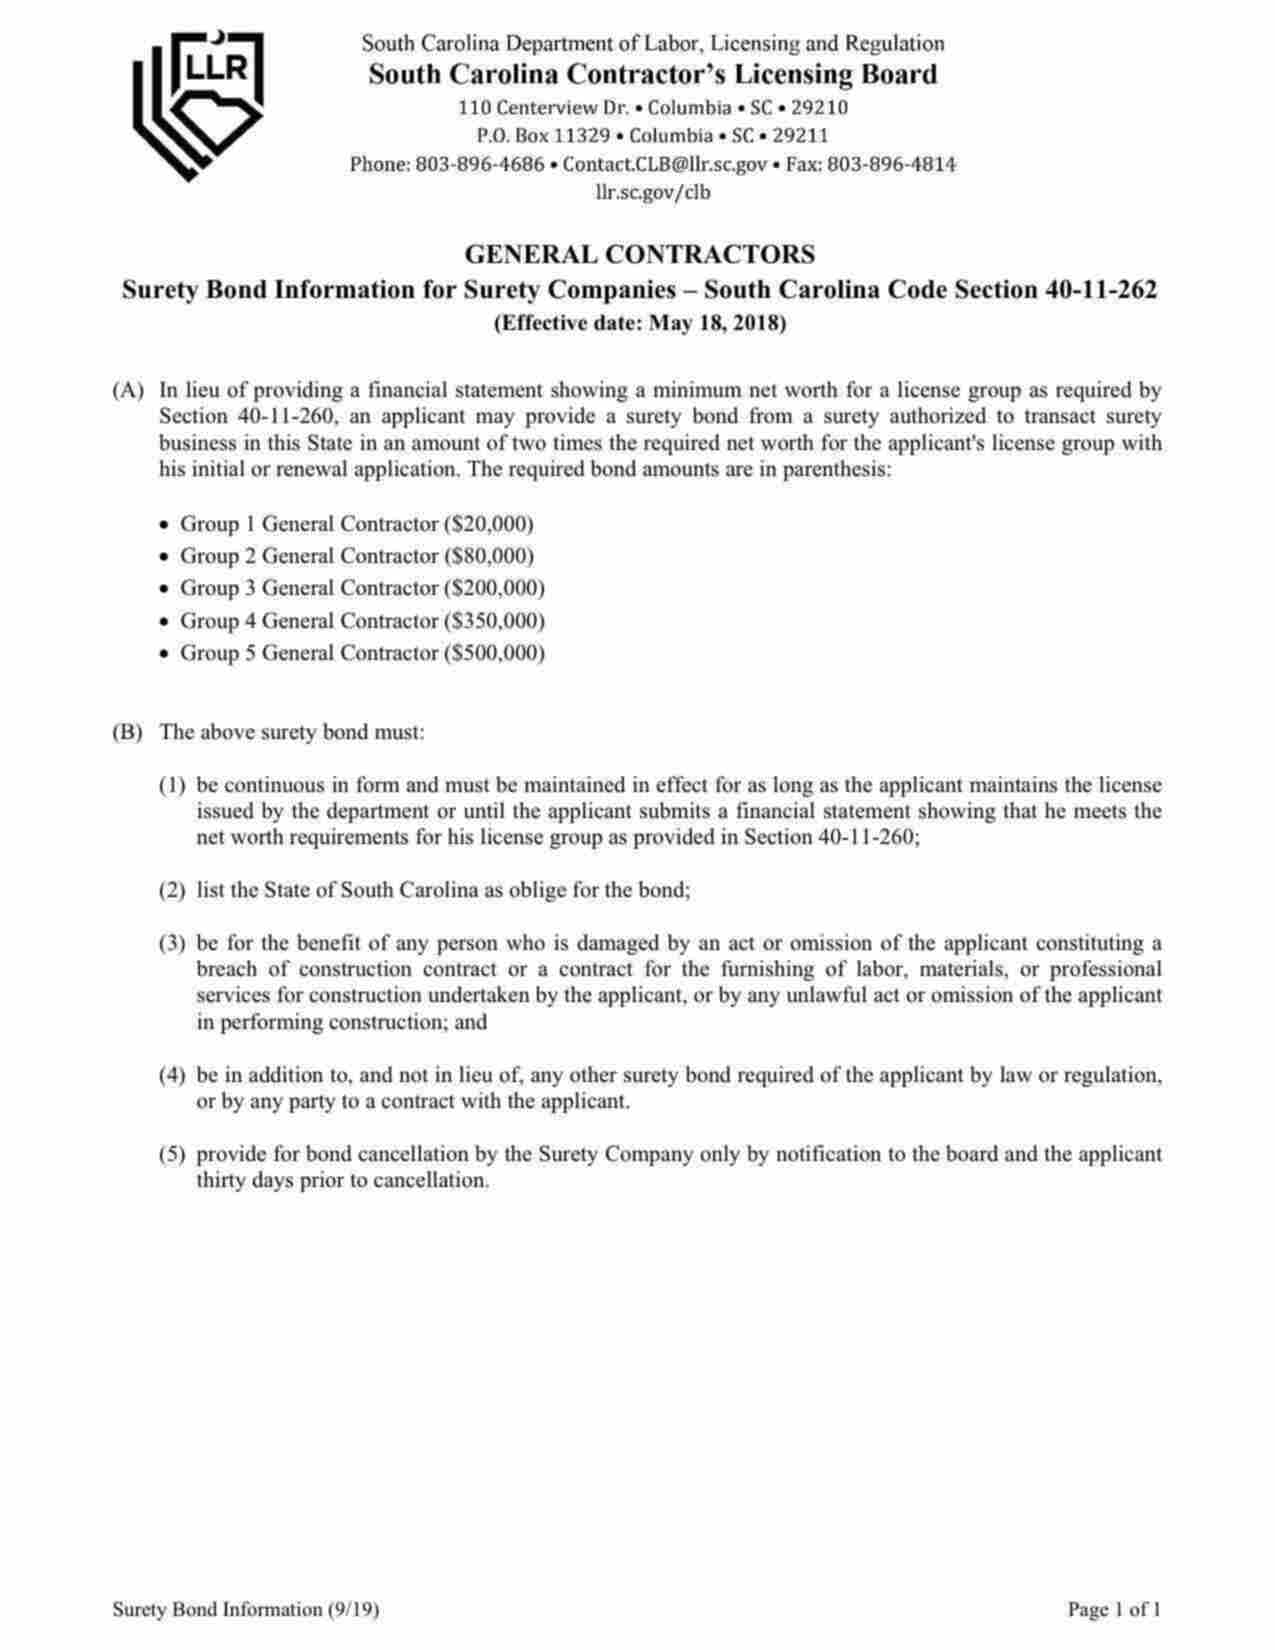 South Carolina General Contractor (Group 3) Bond Form